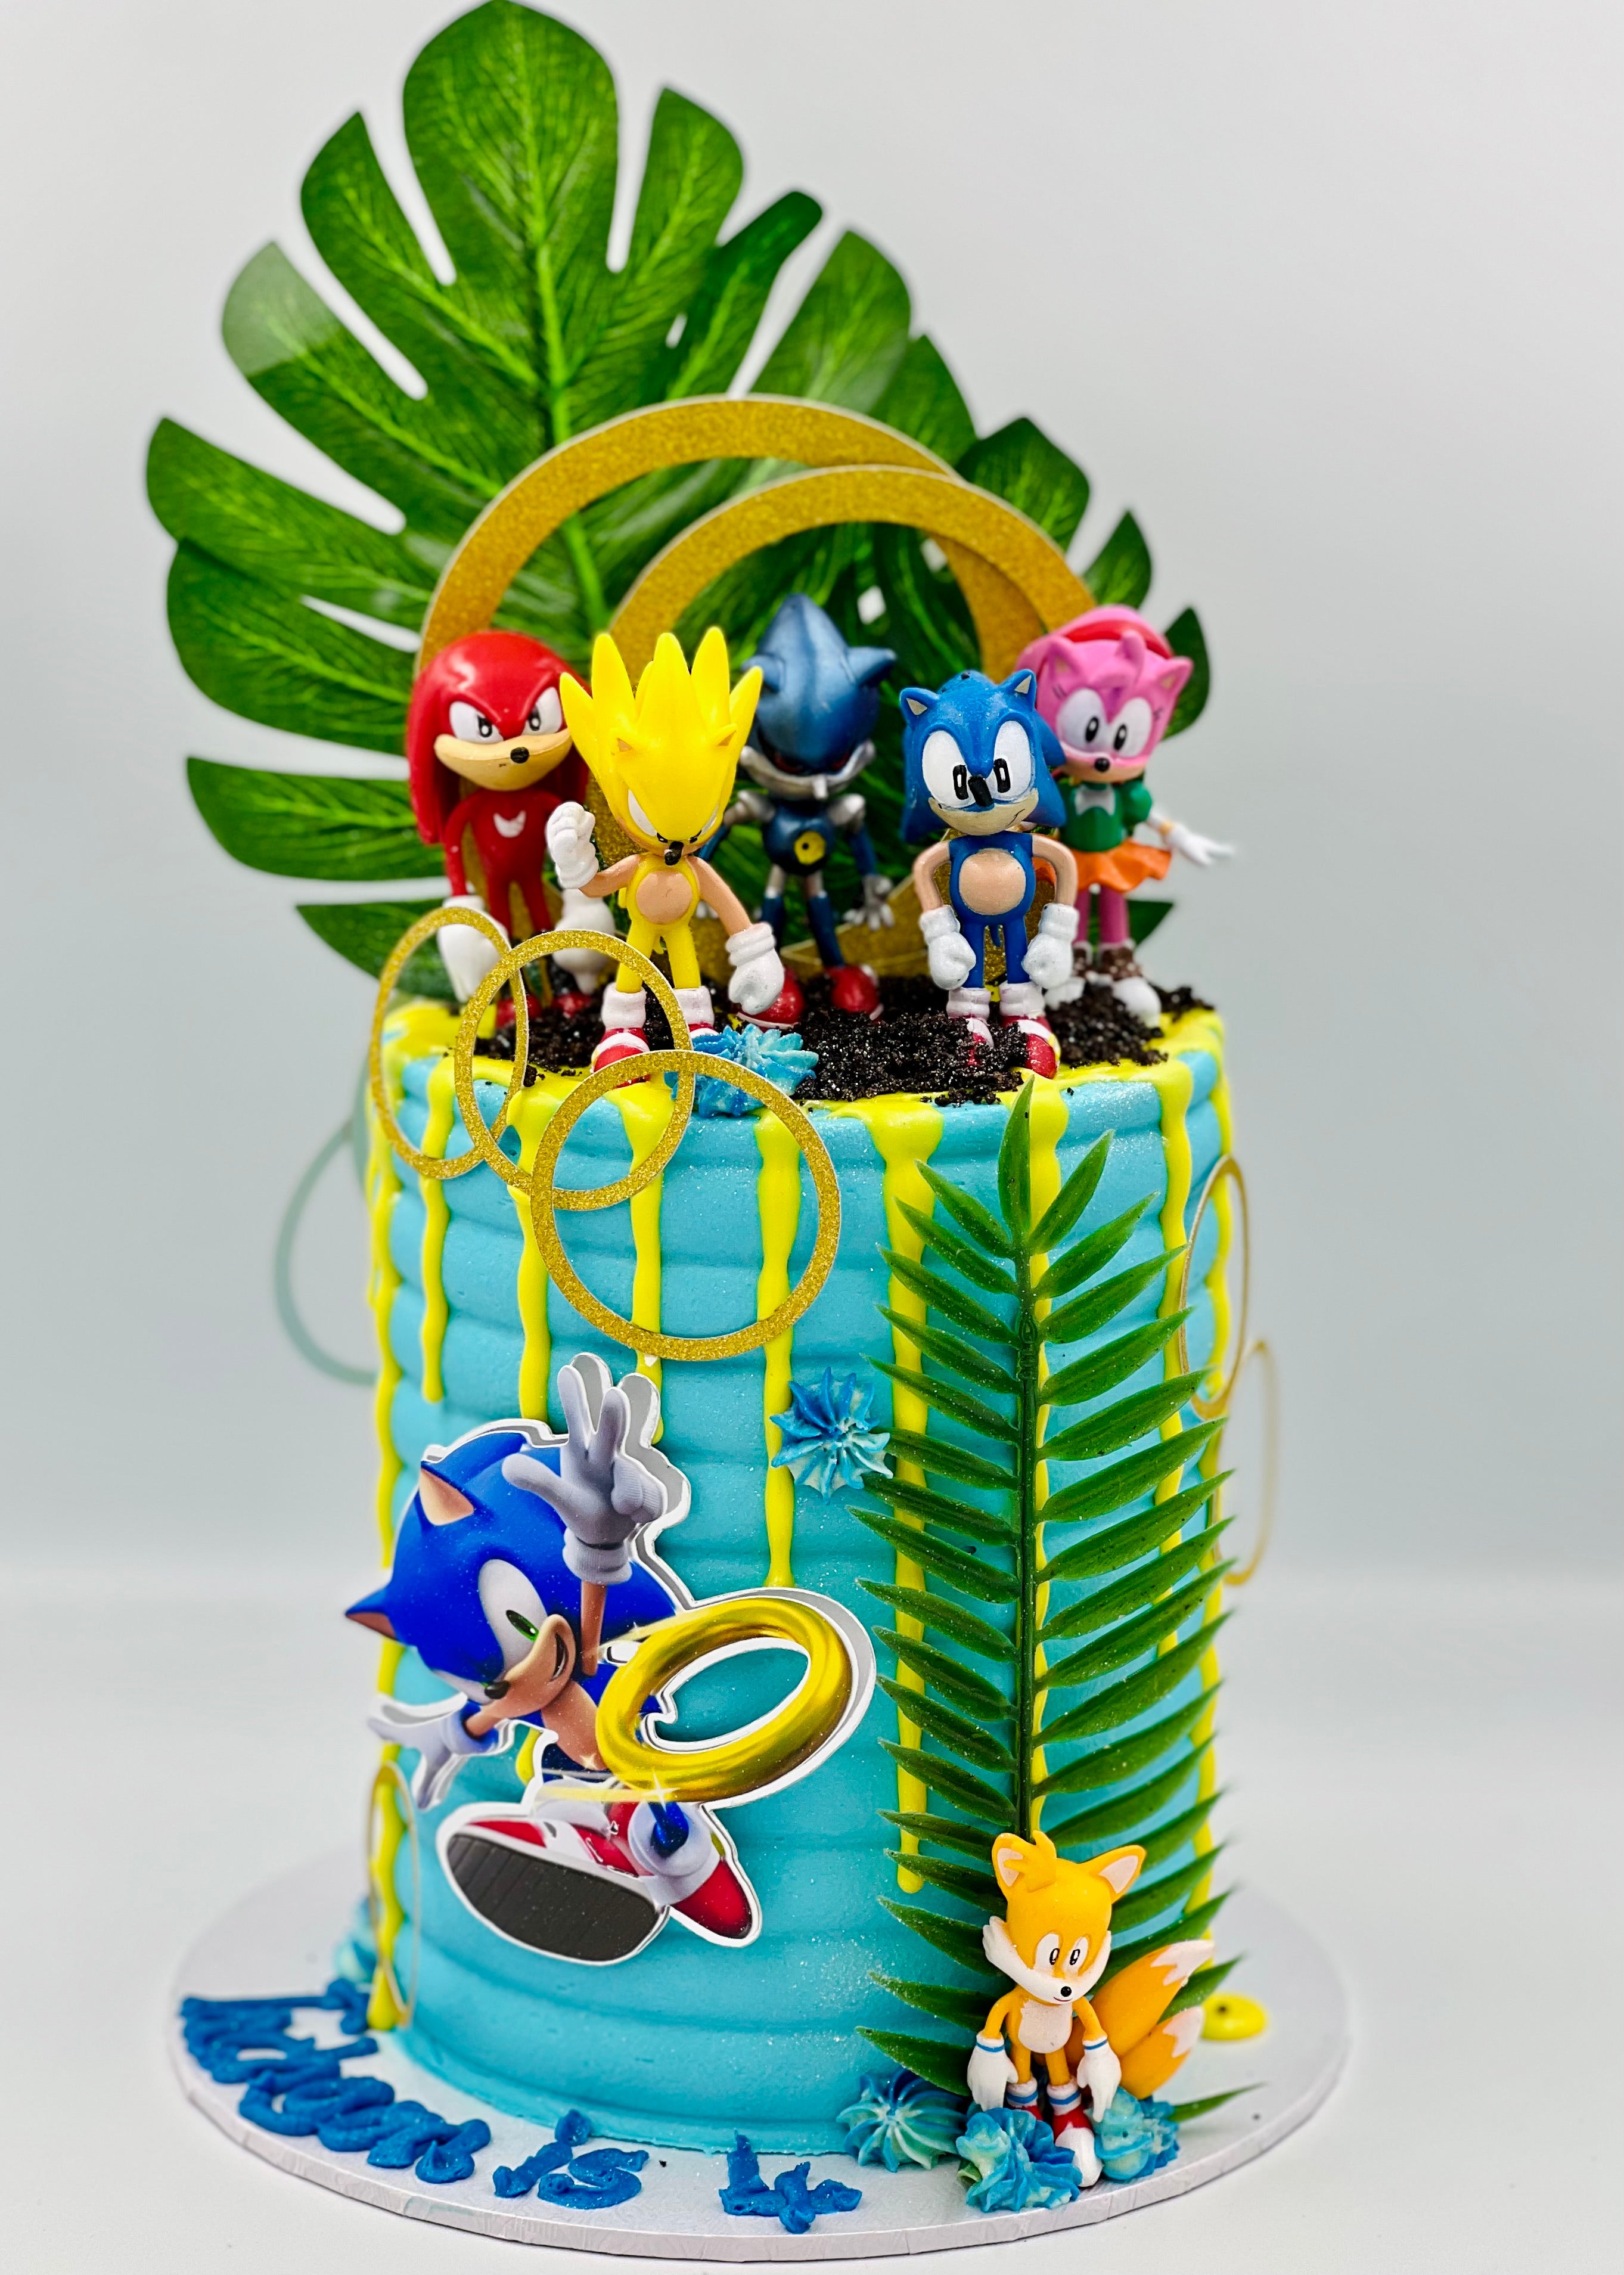 Sonic Hedgehog Cake | Sonic The Hedgehog Birthday Cakes | The Cake Store